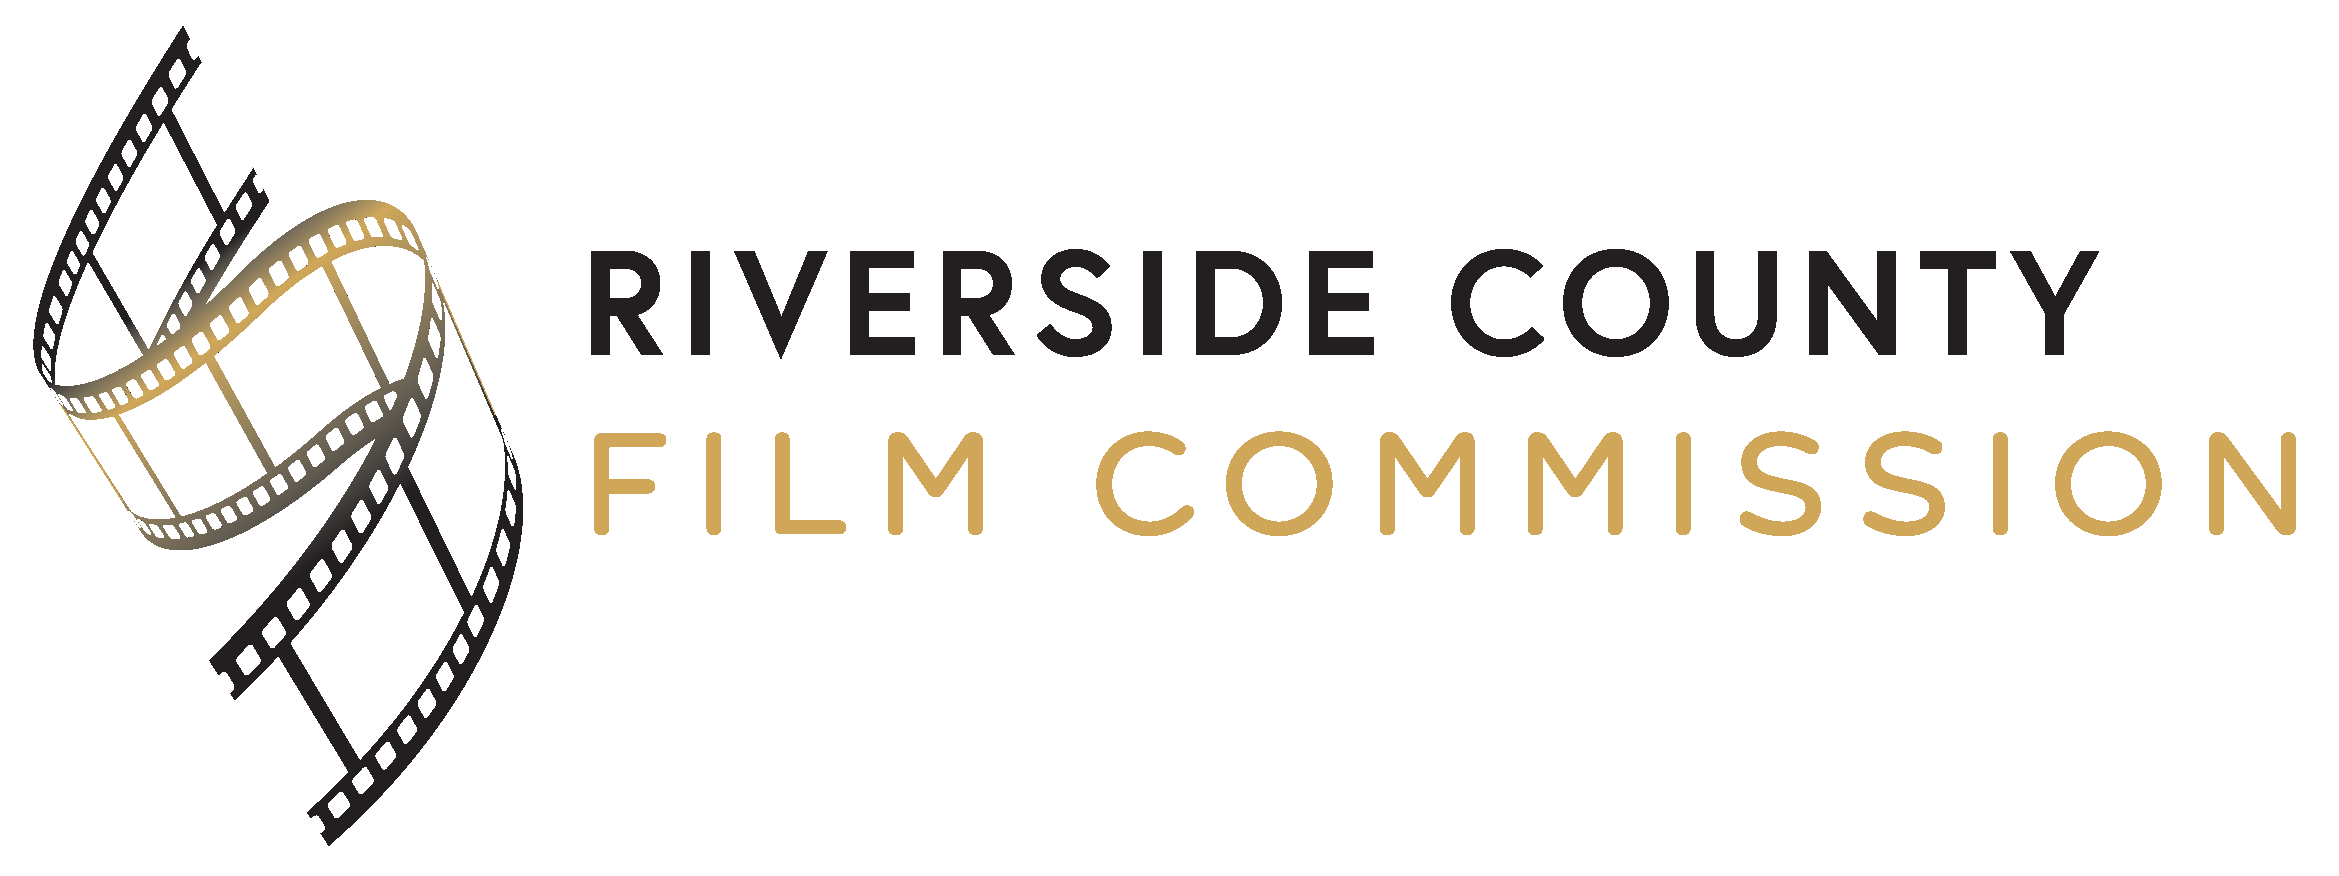 Riverside County Film Commission Logo